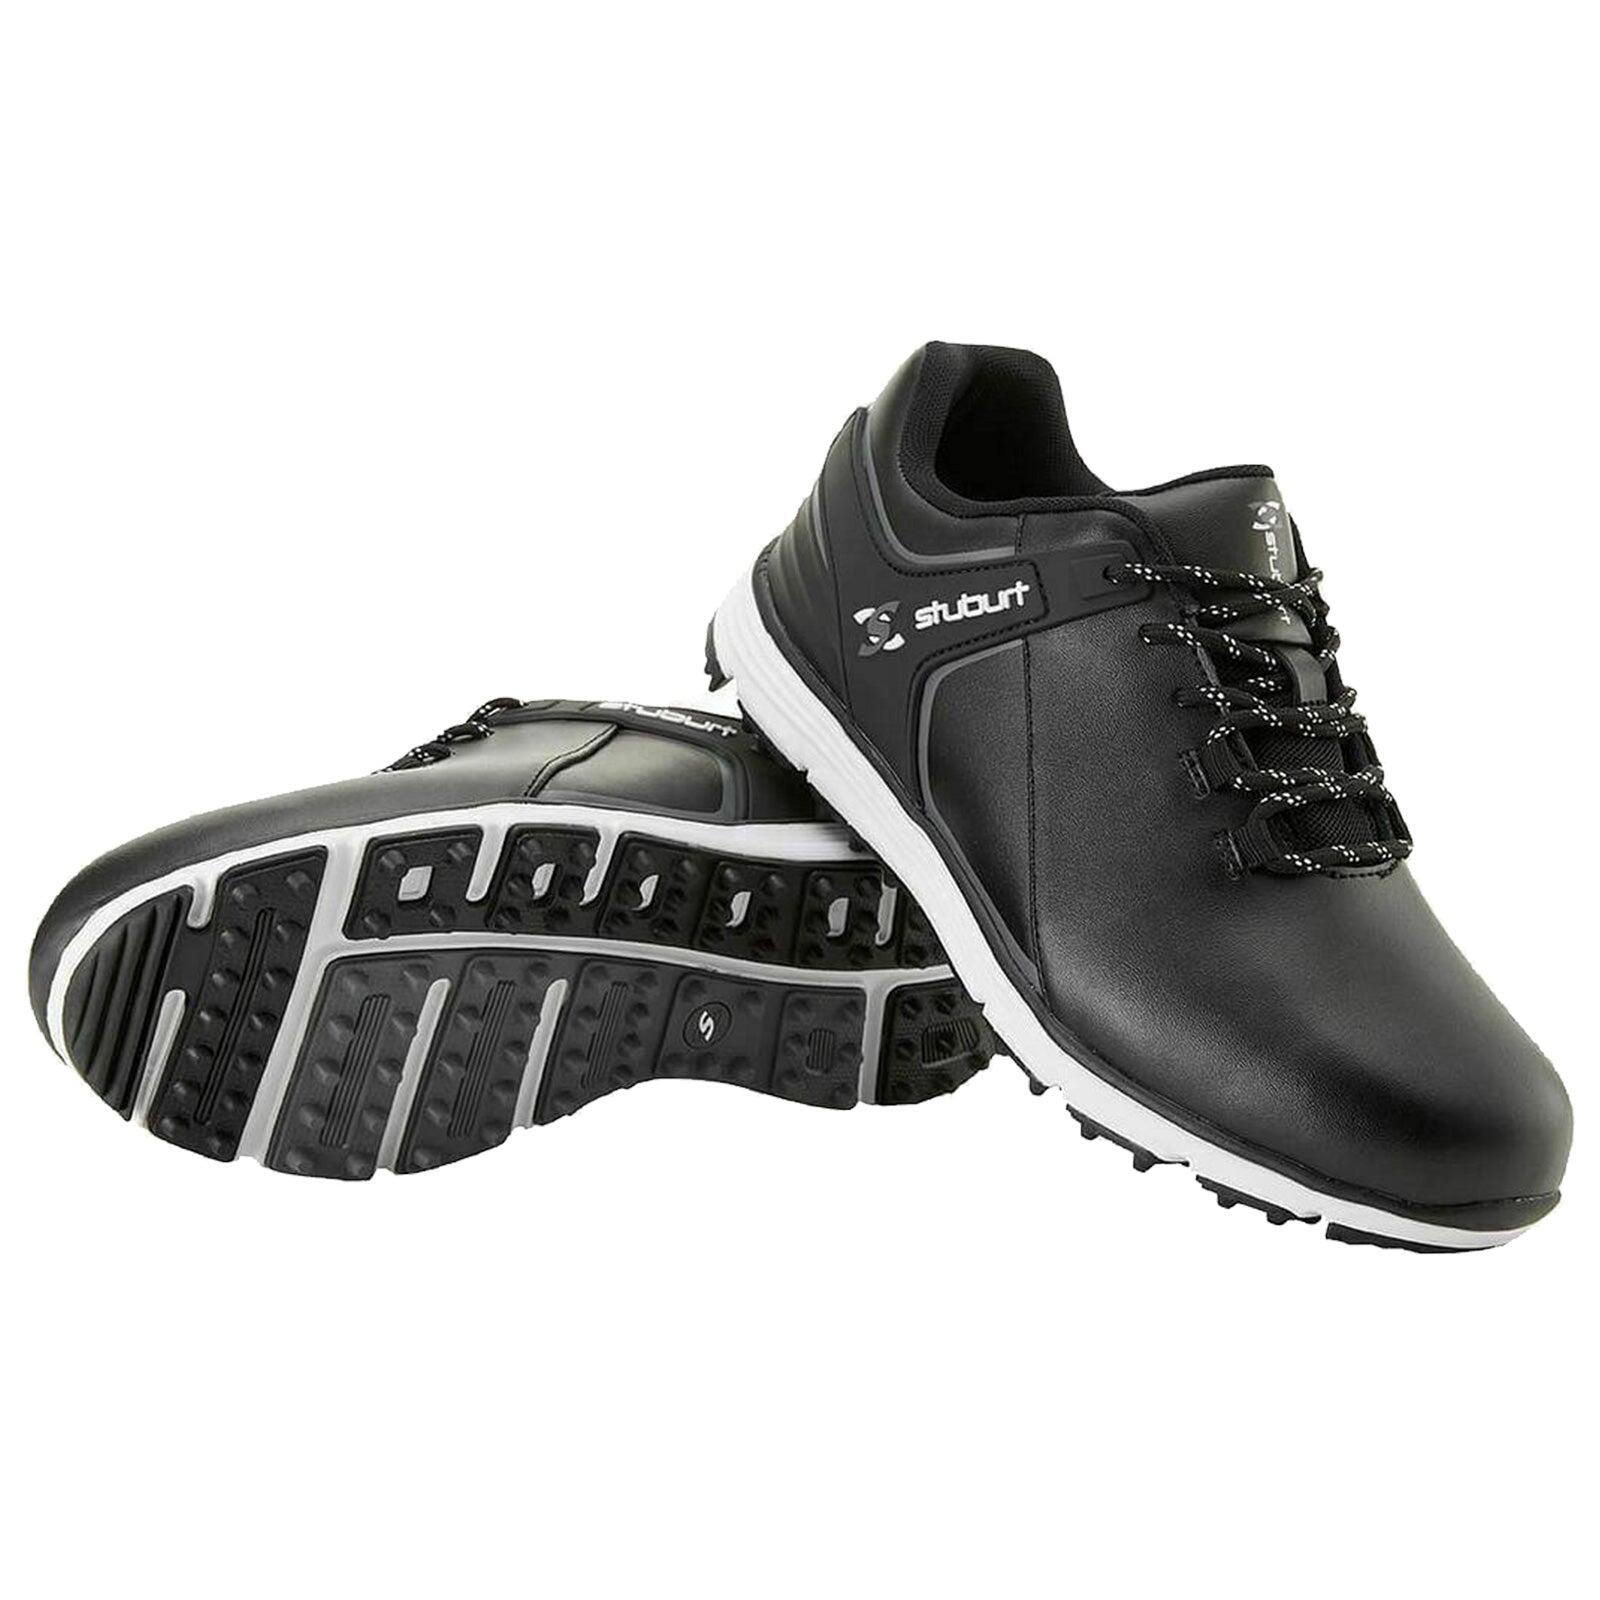 Stuburt Evolve 3.0 Spikeless Golf Shoes - White 3/5